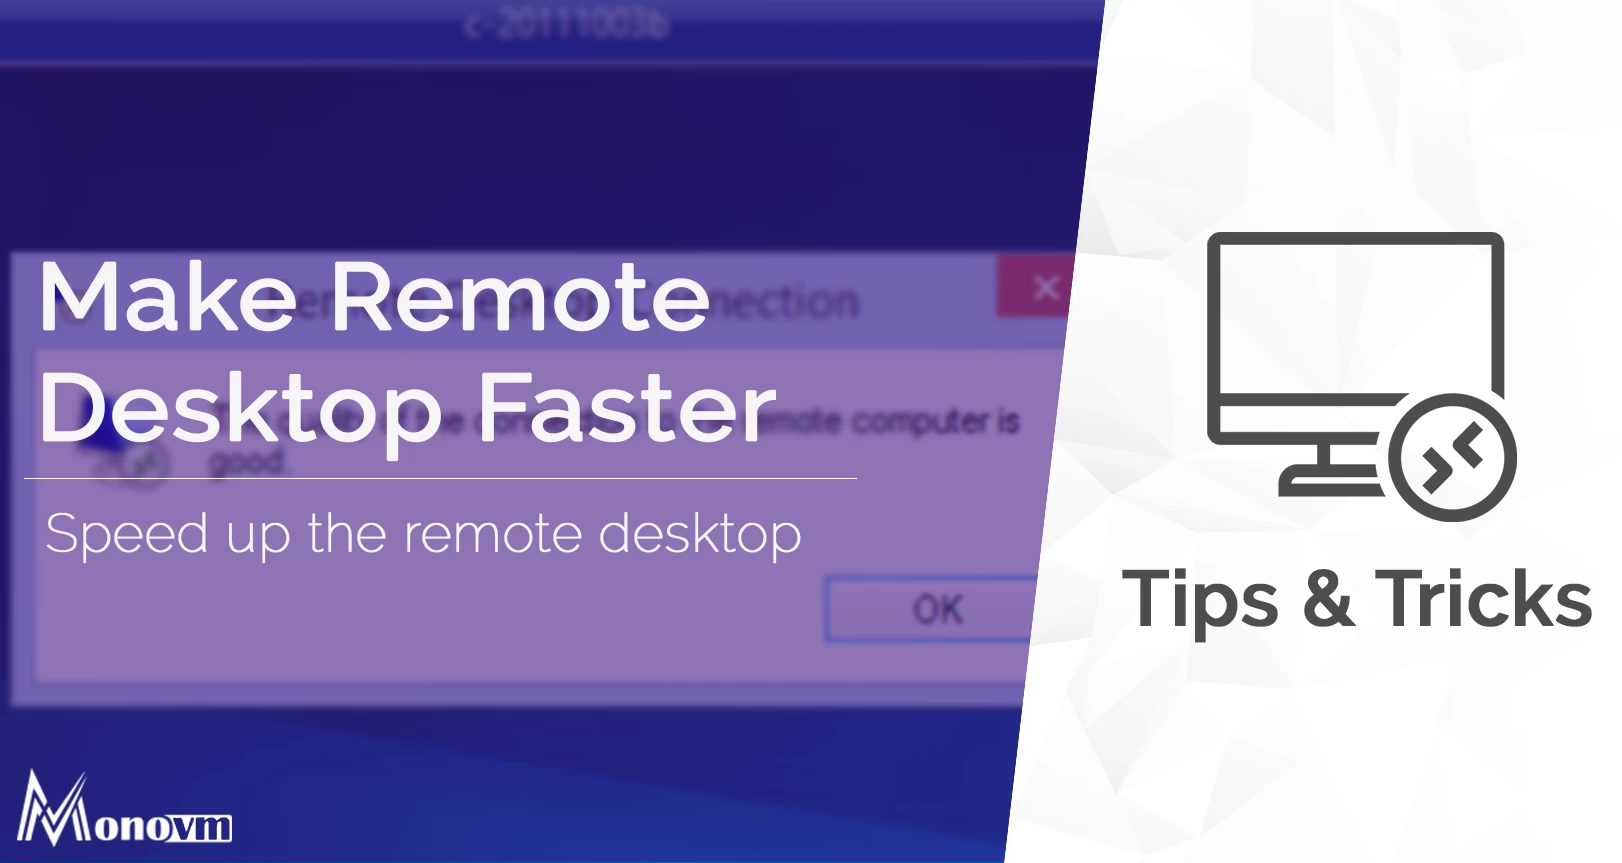 How to Make Remote Desktop Faster